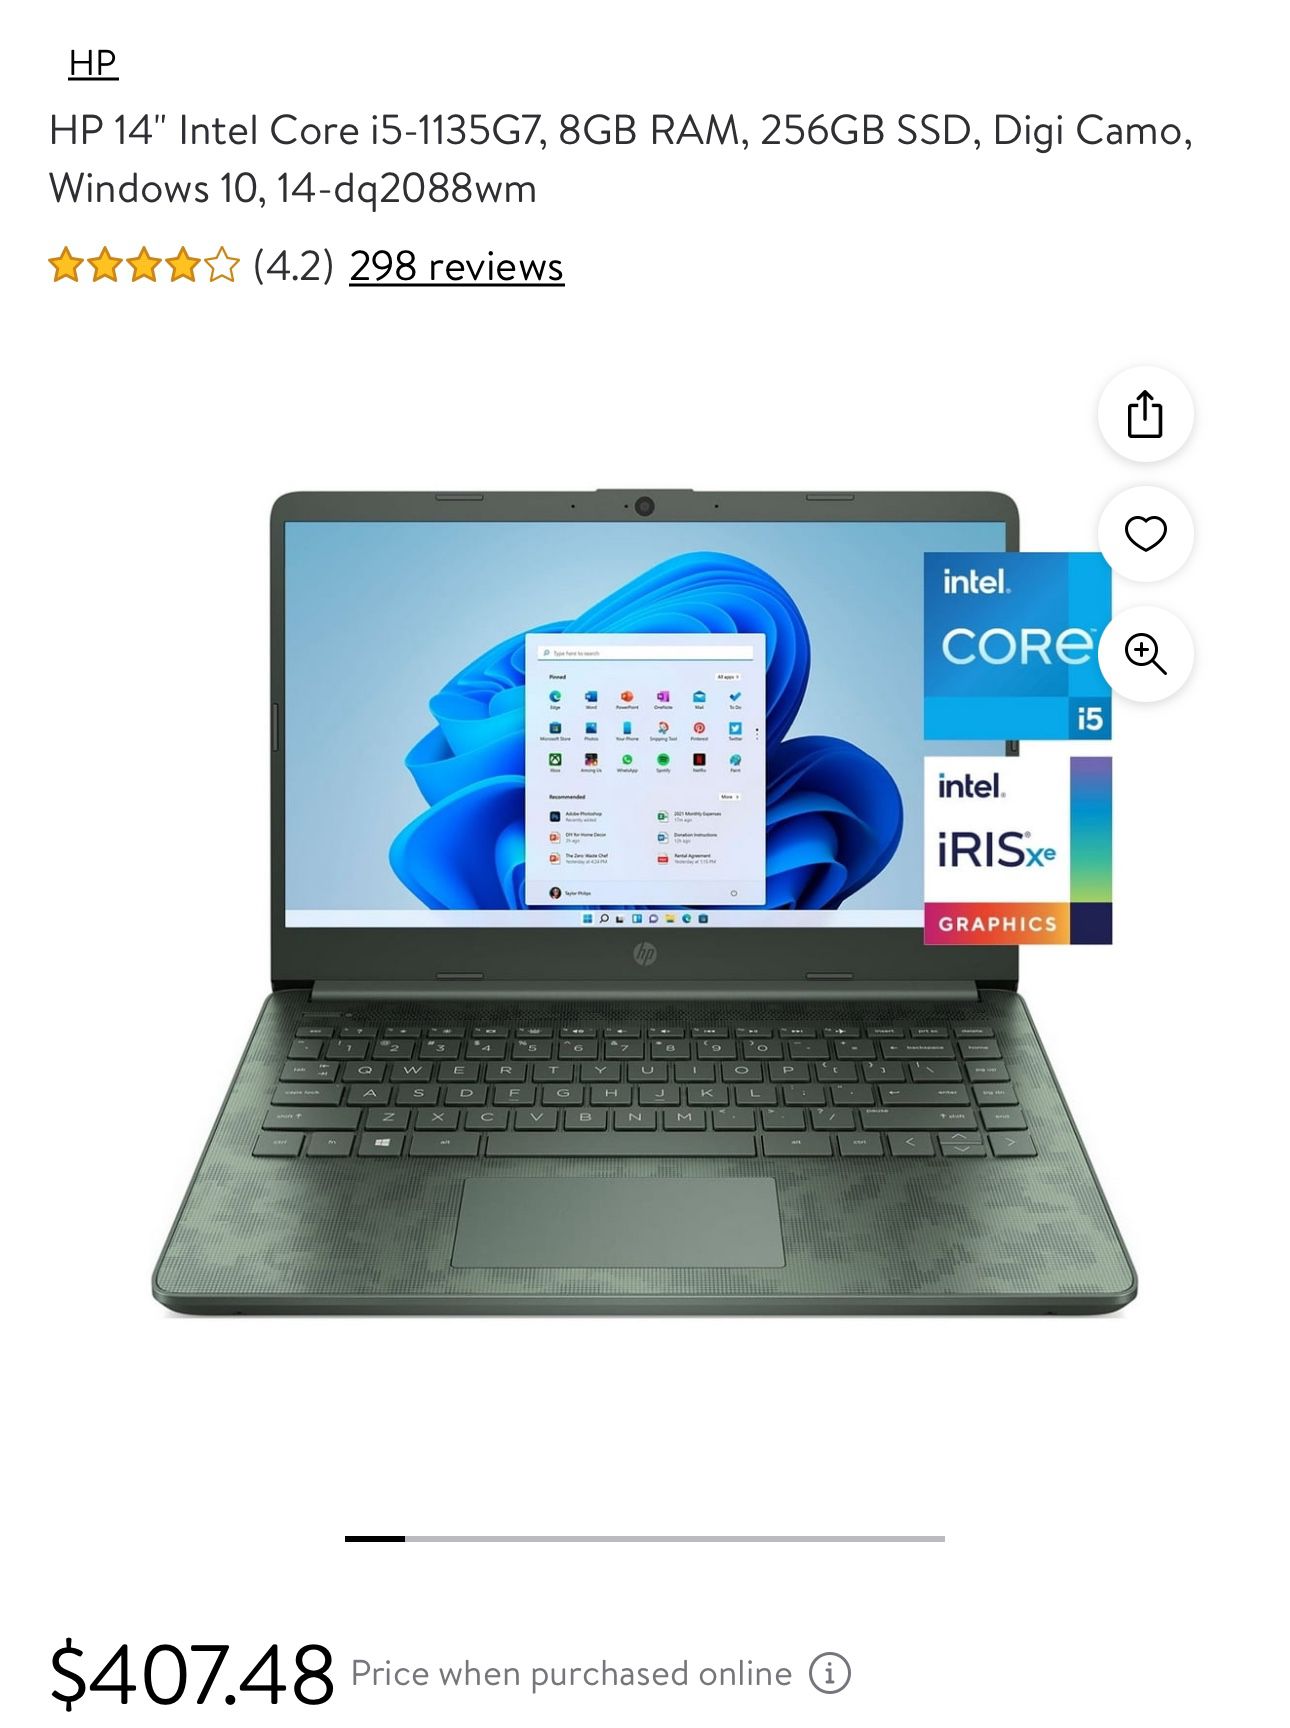 HP 14” i5 Laptop